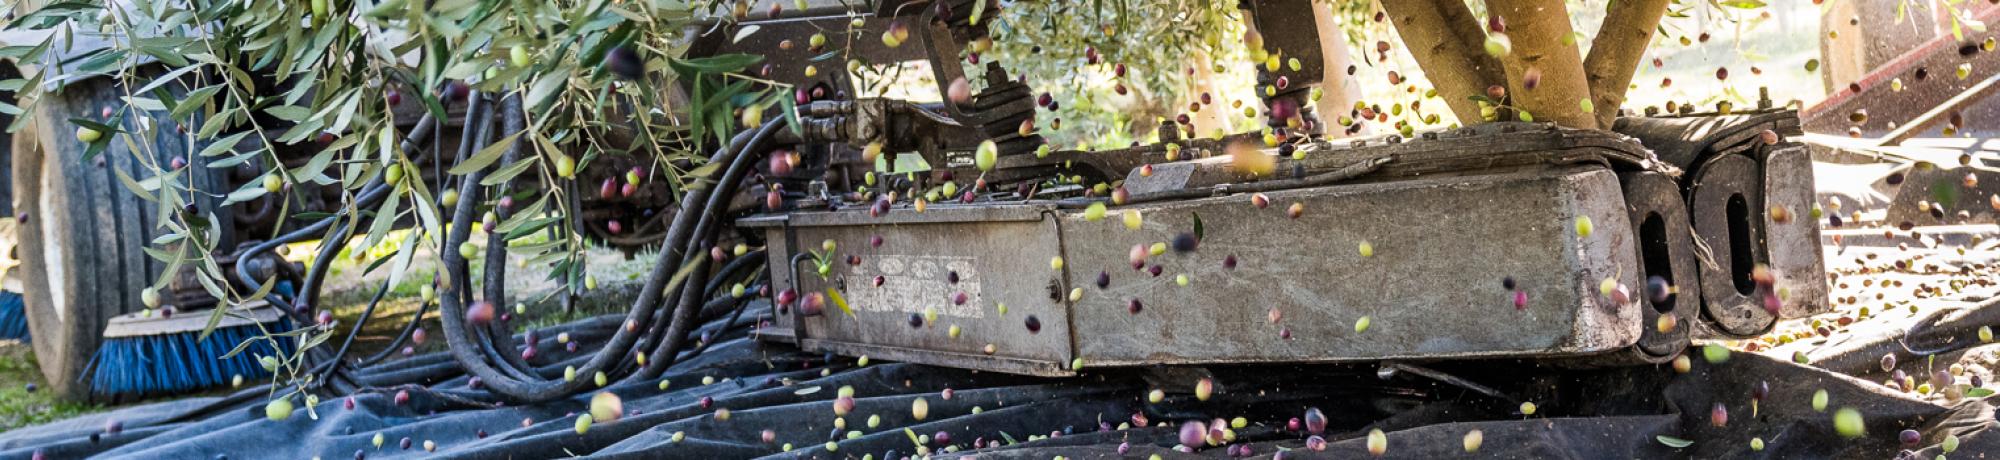 tractor harvesting olives